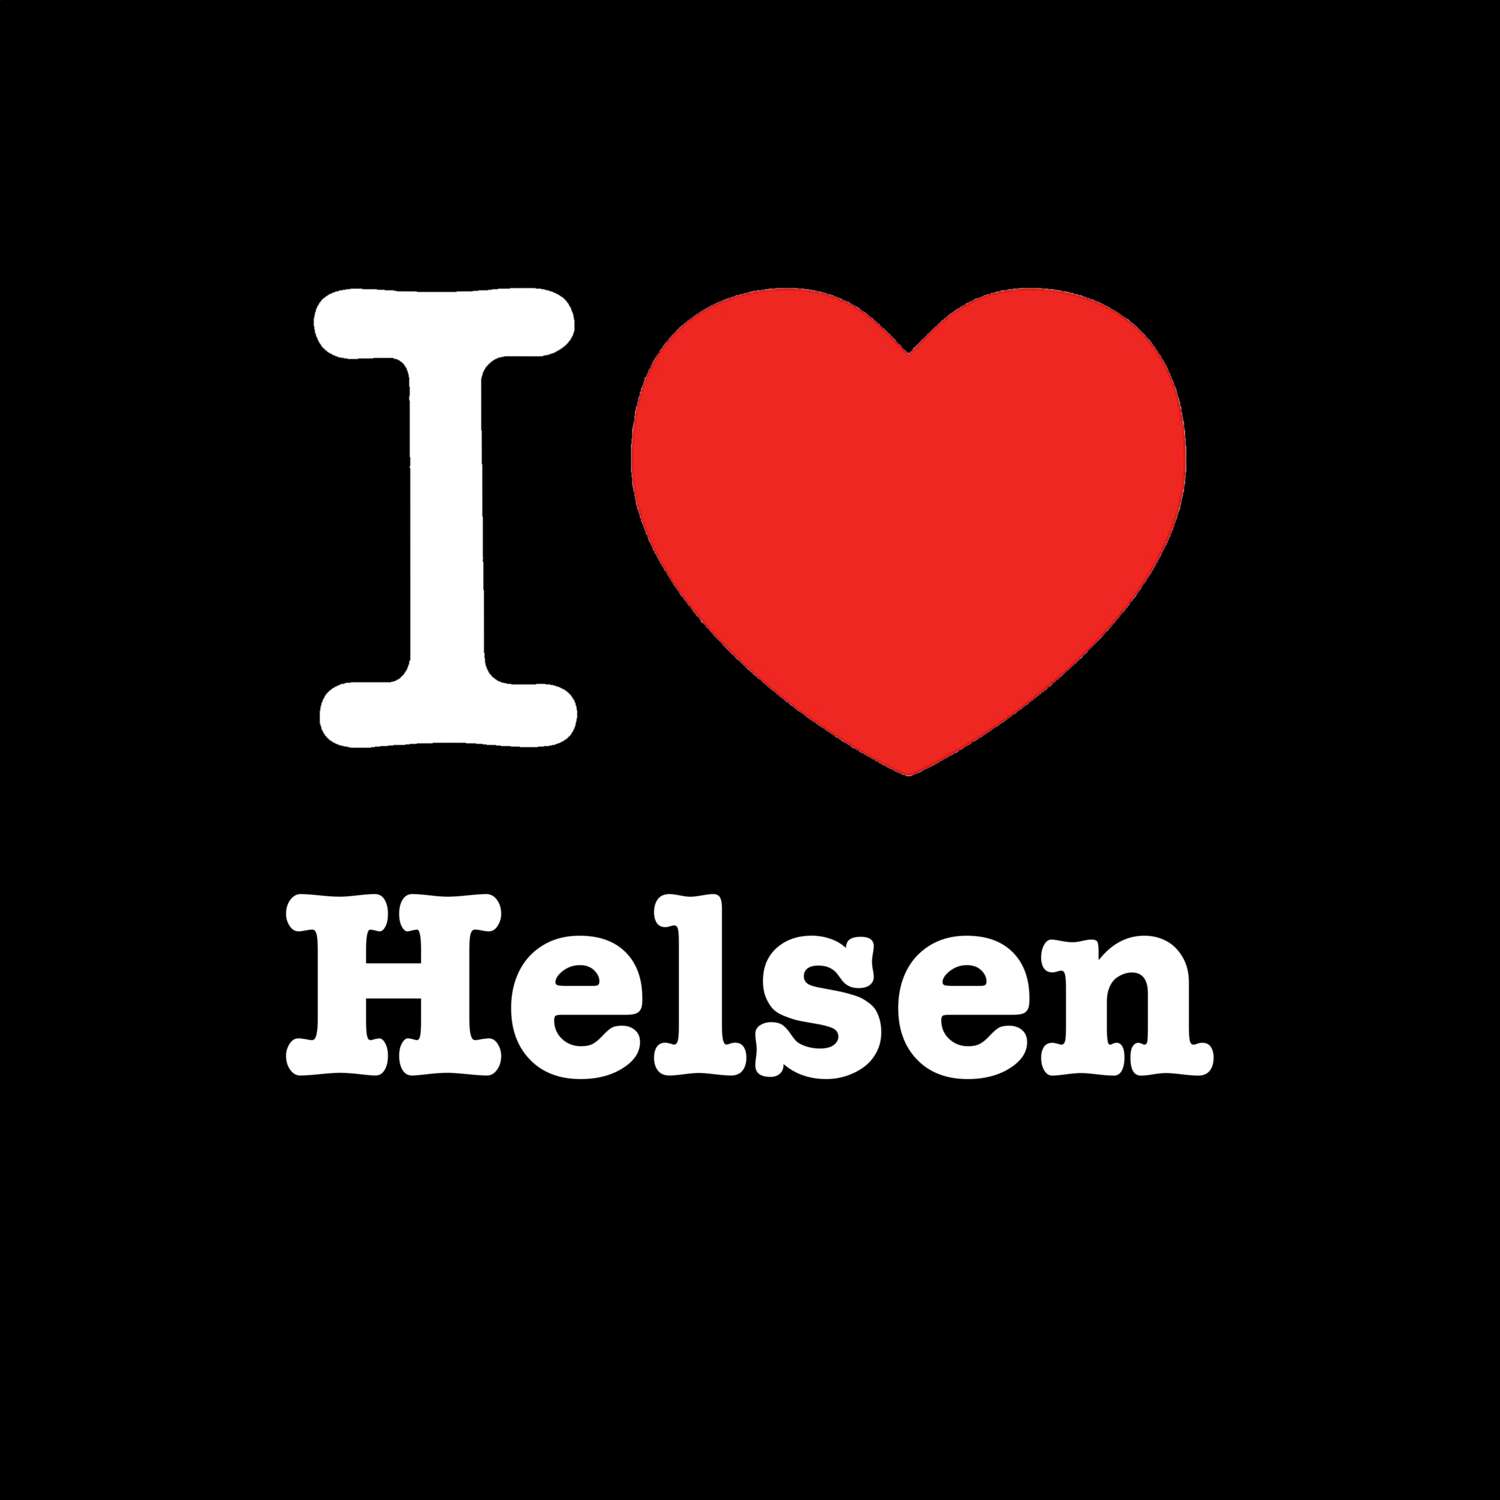 Helsen T-Shirt »I love«